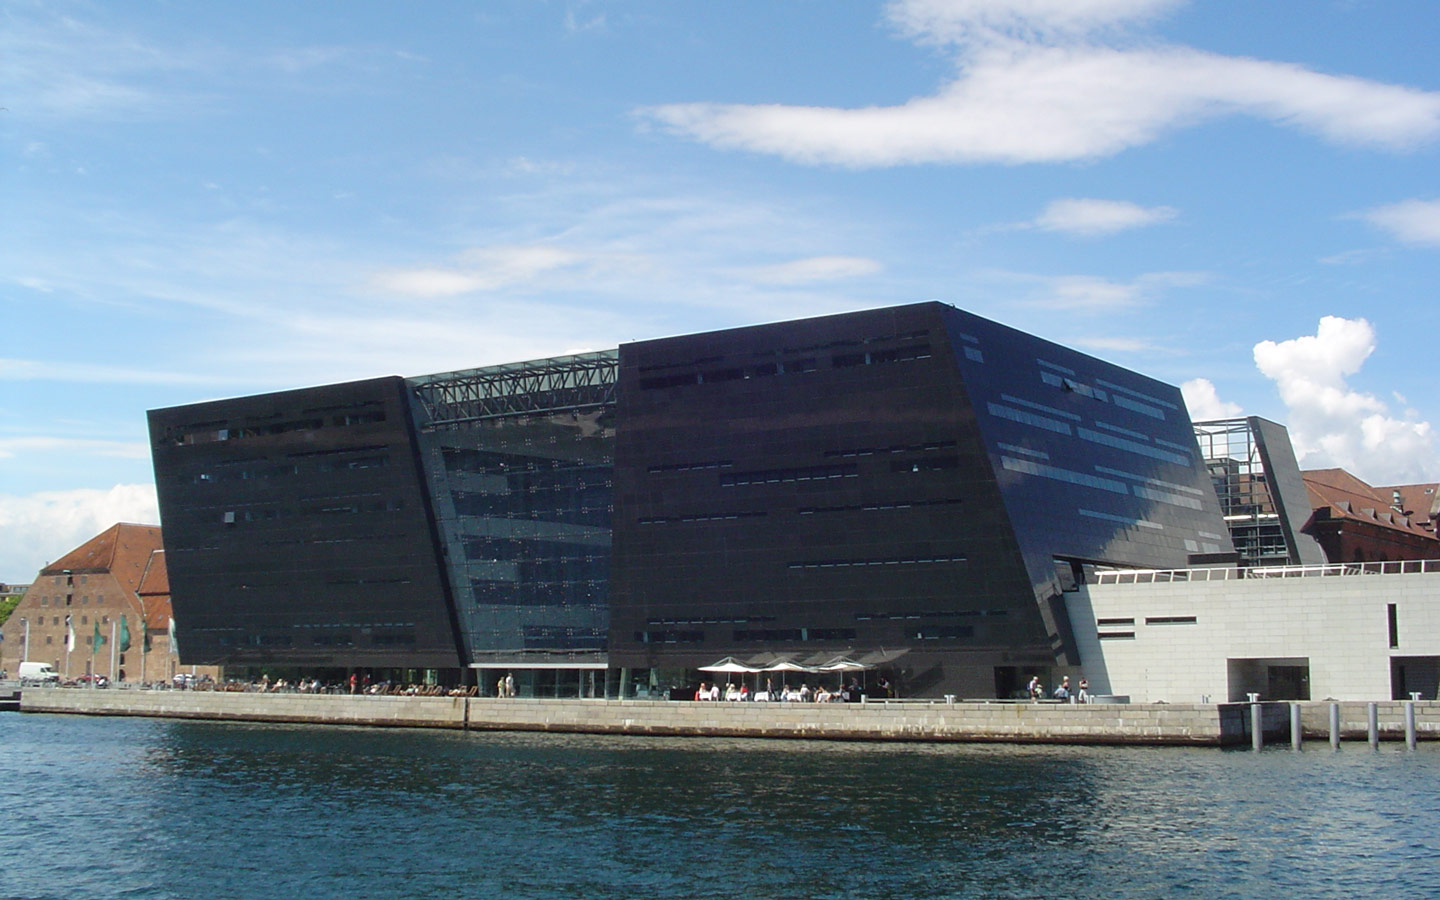 Black Diamond – A Biblioteca pública de Copenhague